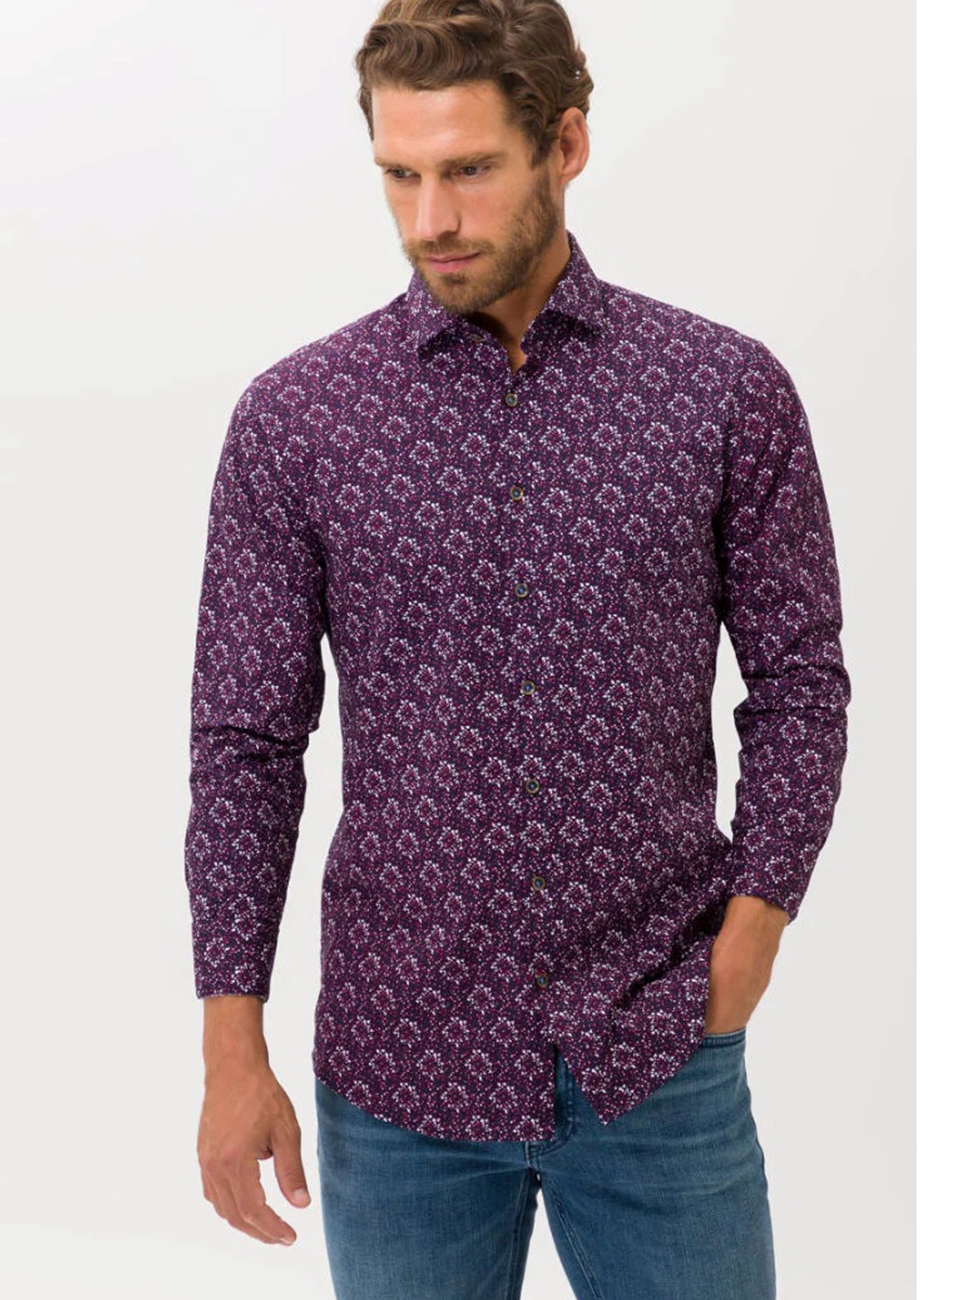 Lavender Harold P Hi Flex Easy Care Shirt | Brax Men\'s Shirts Collection |  Sam\'s Tailoring Fine Men Clothing